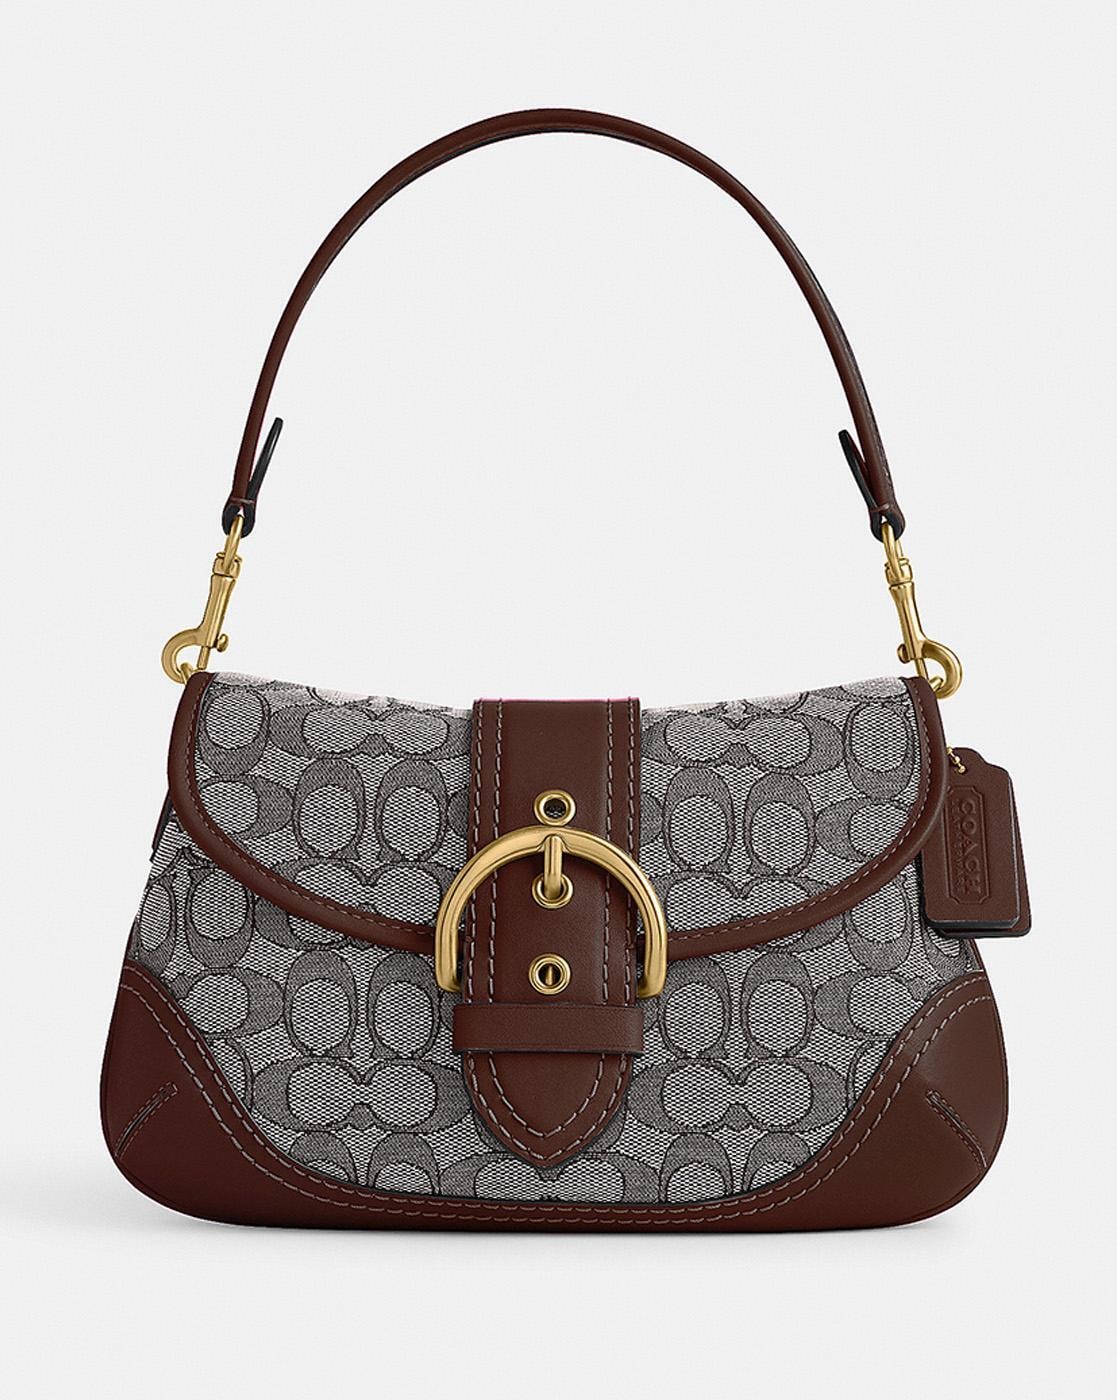 Brown shoulder coach purse | Trendy purses, Girly bags, Shoulder bag outfit